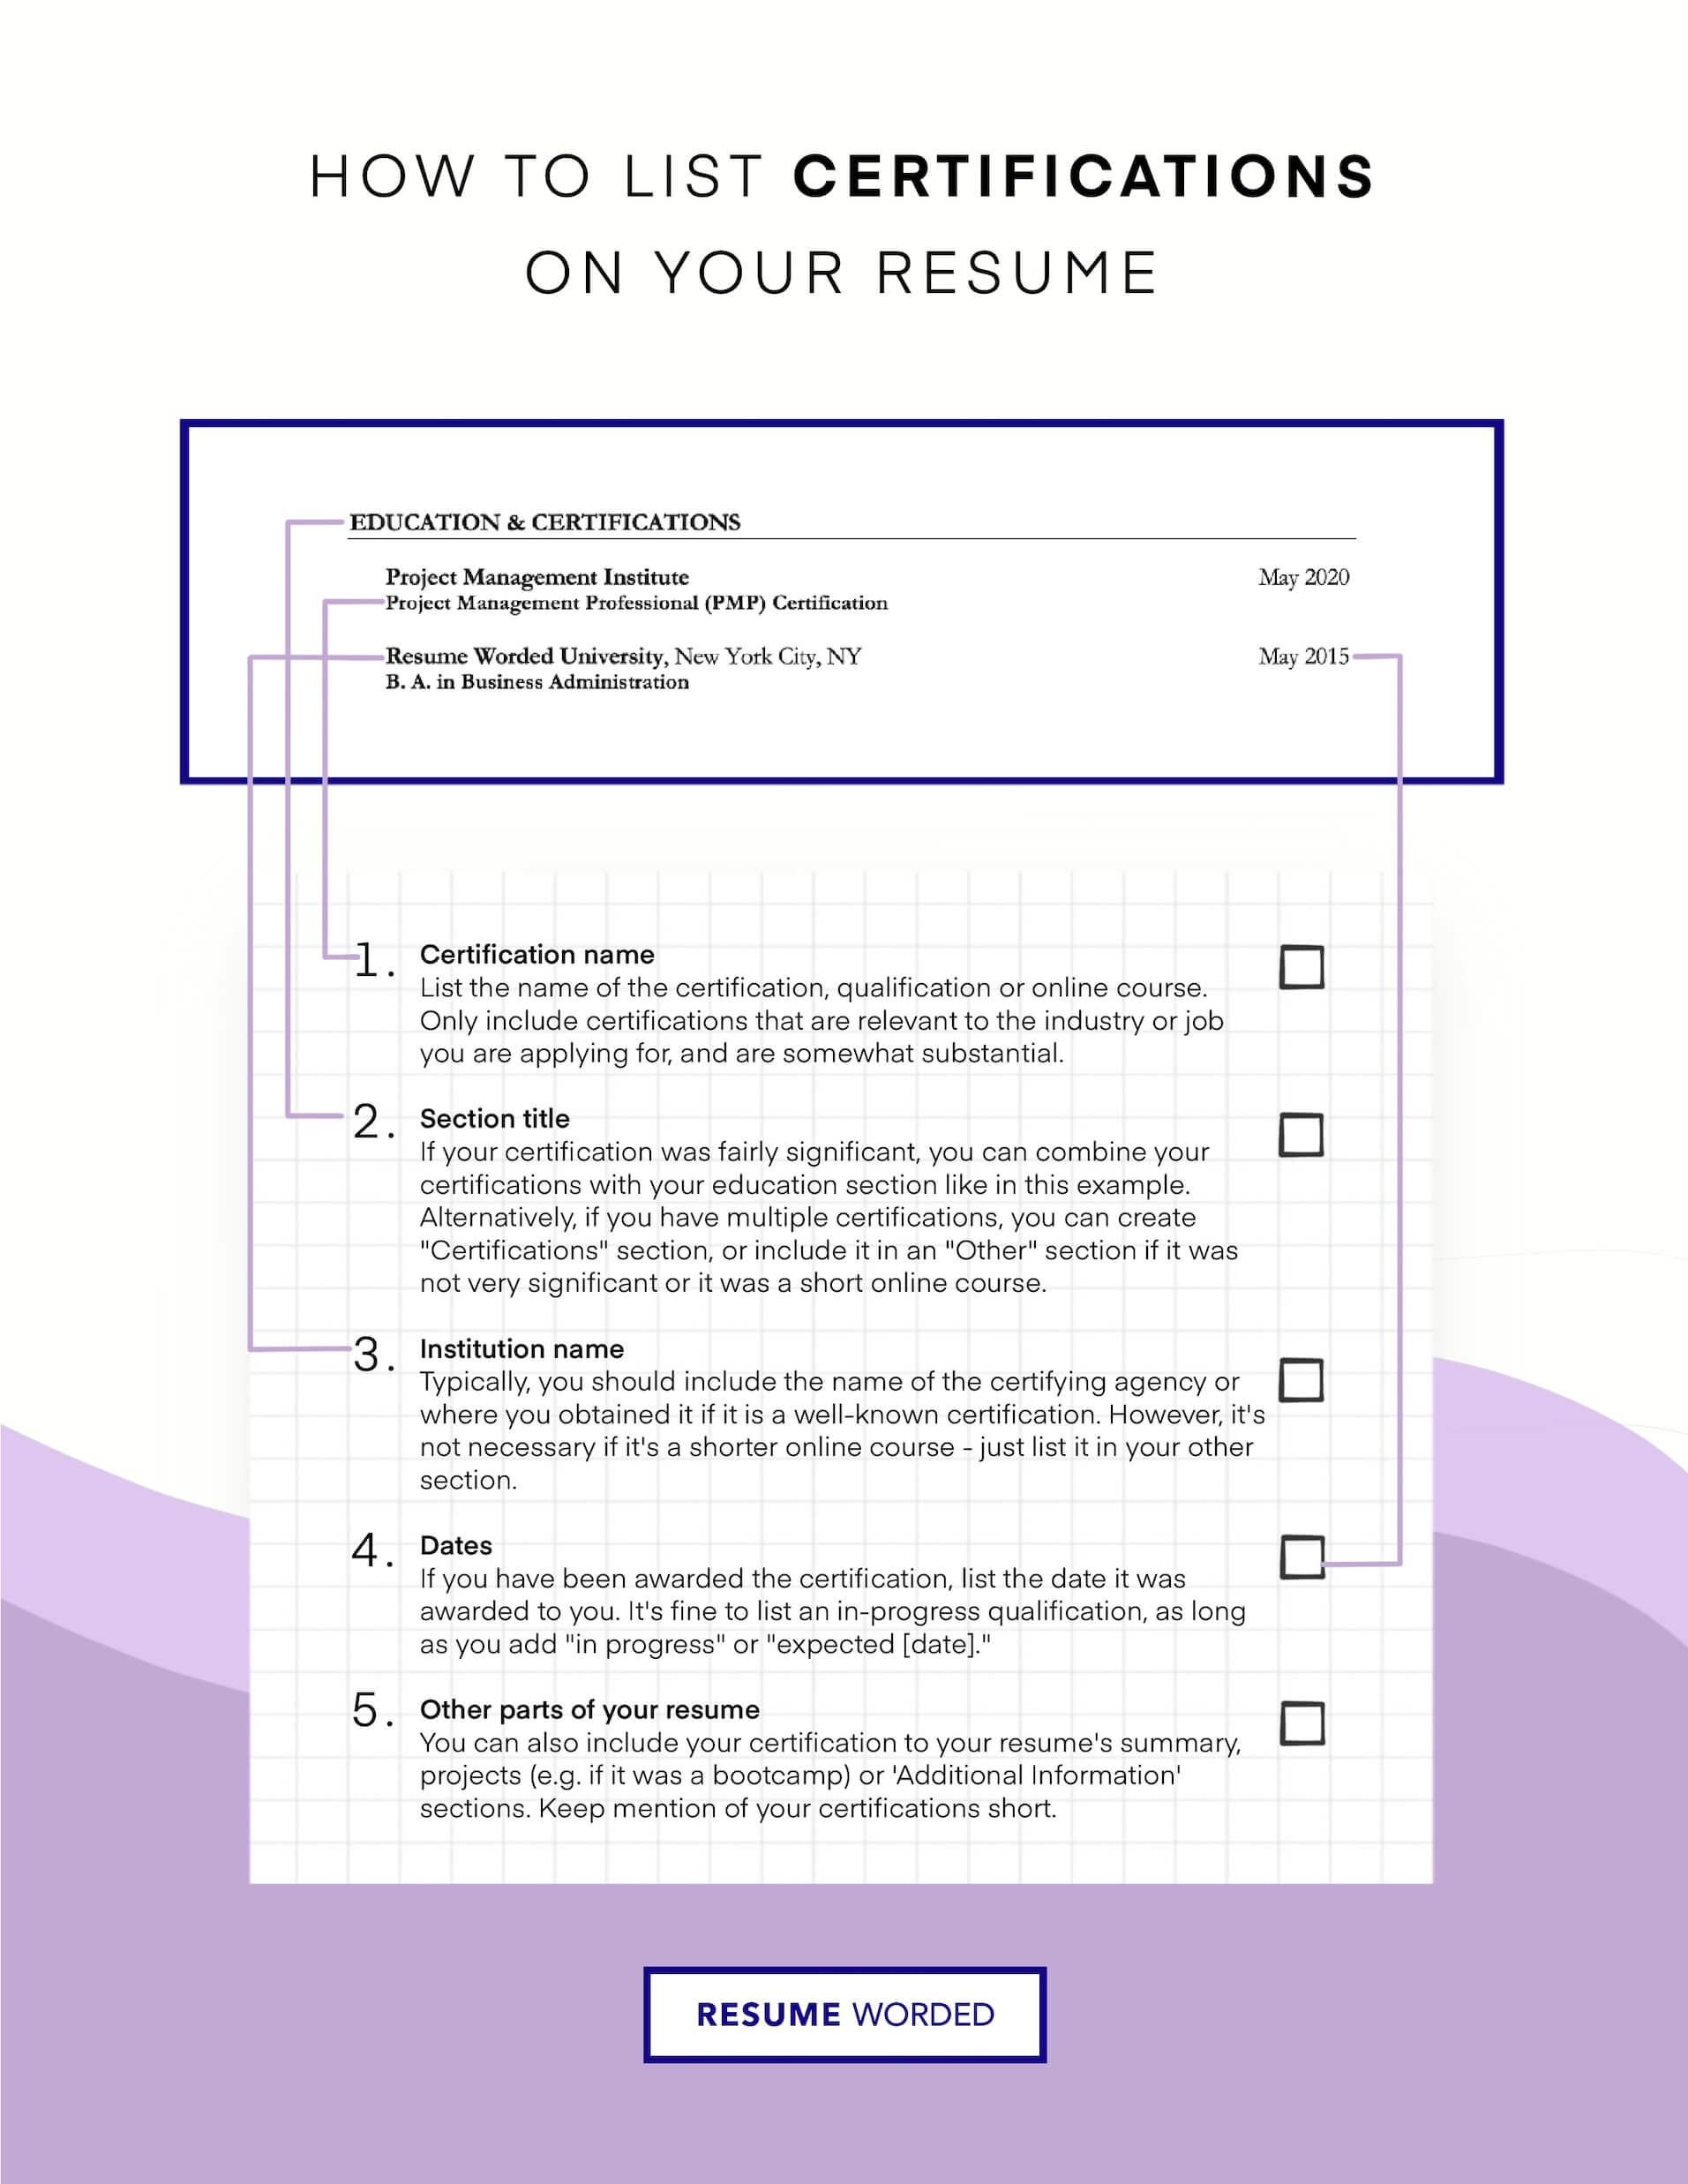 Highlight relevant certifications - Junior Network Administrator Resume